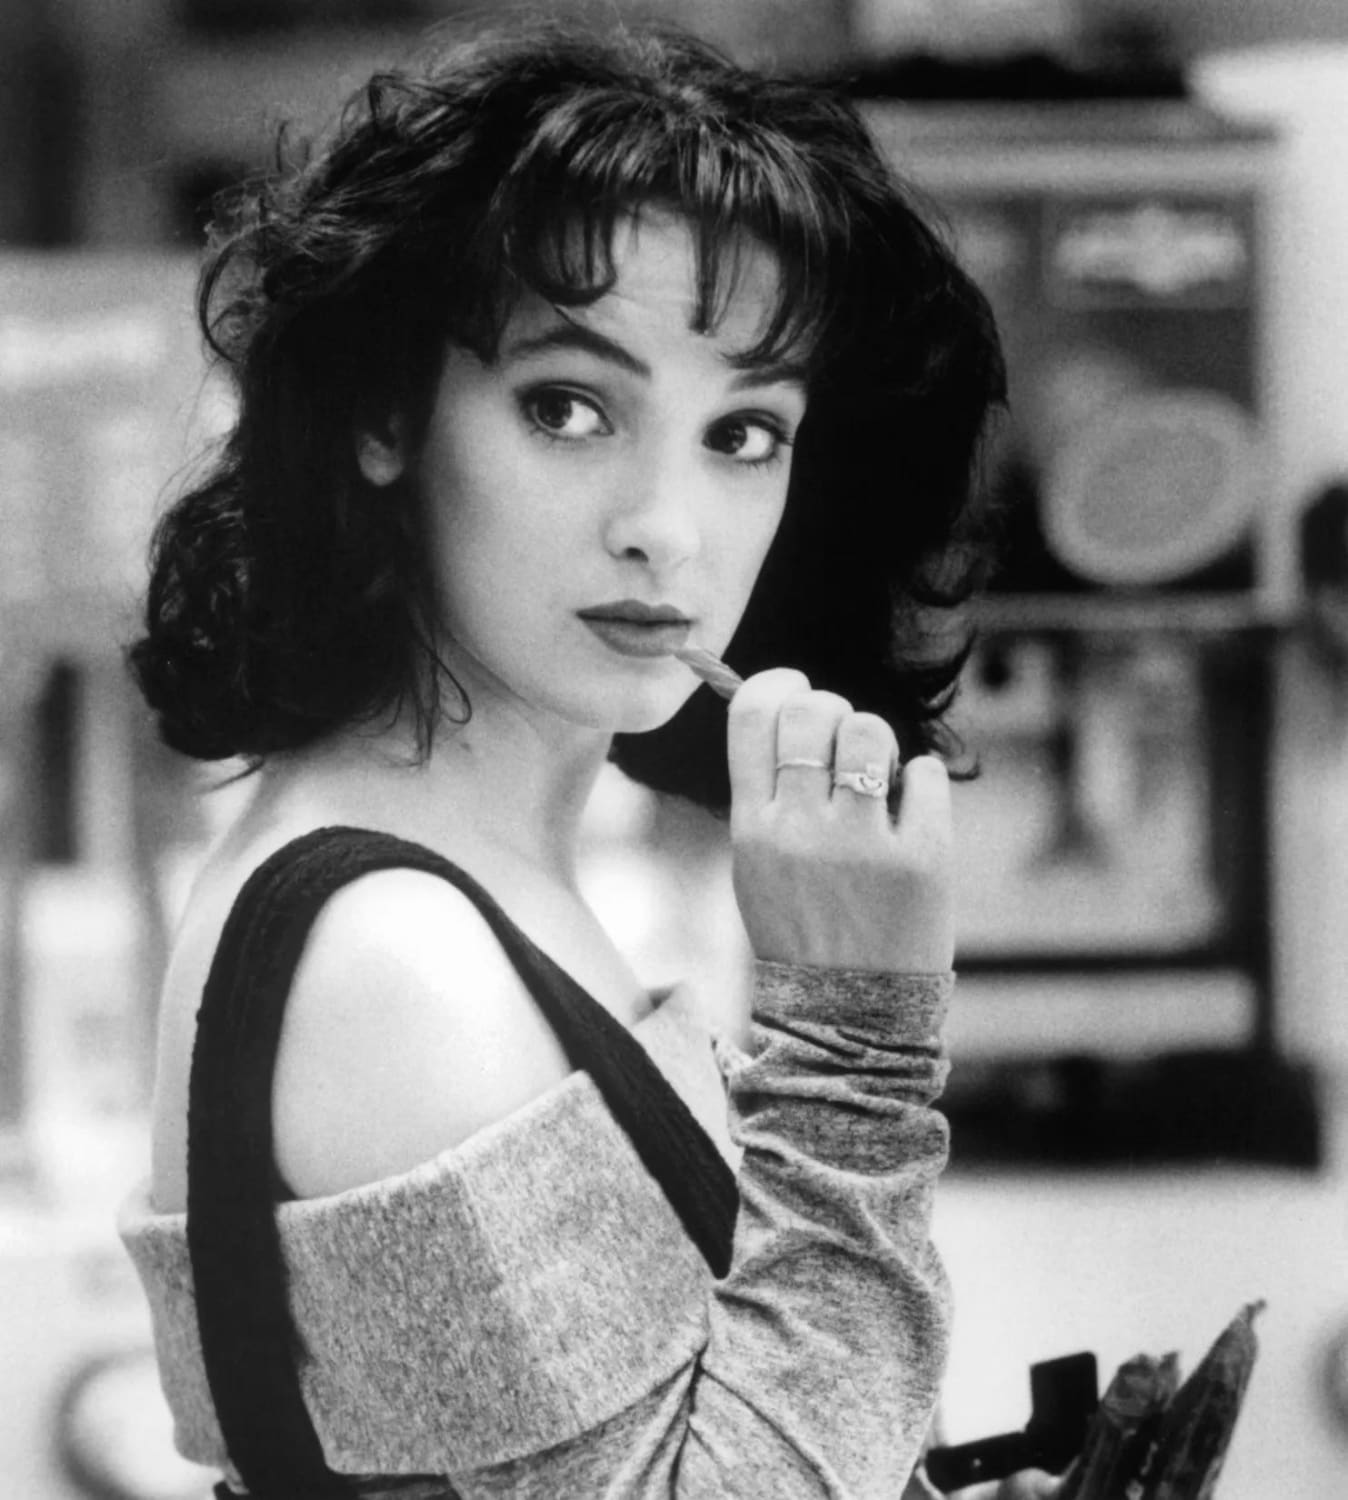 Winona Ryder in “Heathers”, 1988.